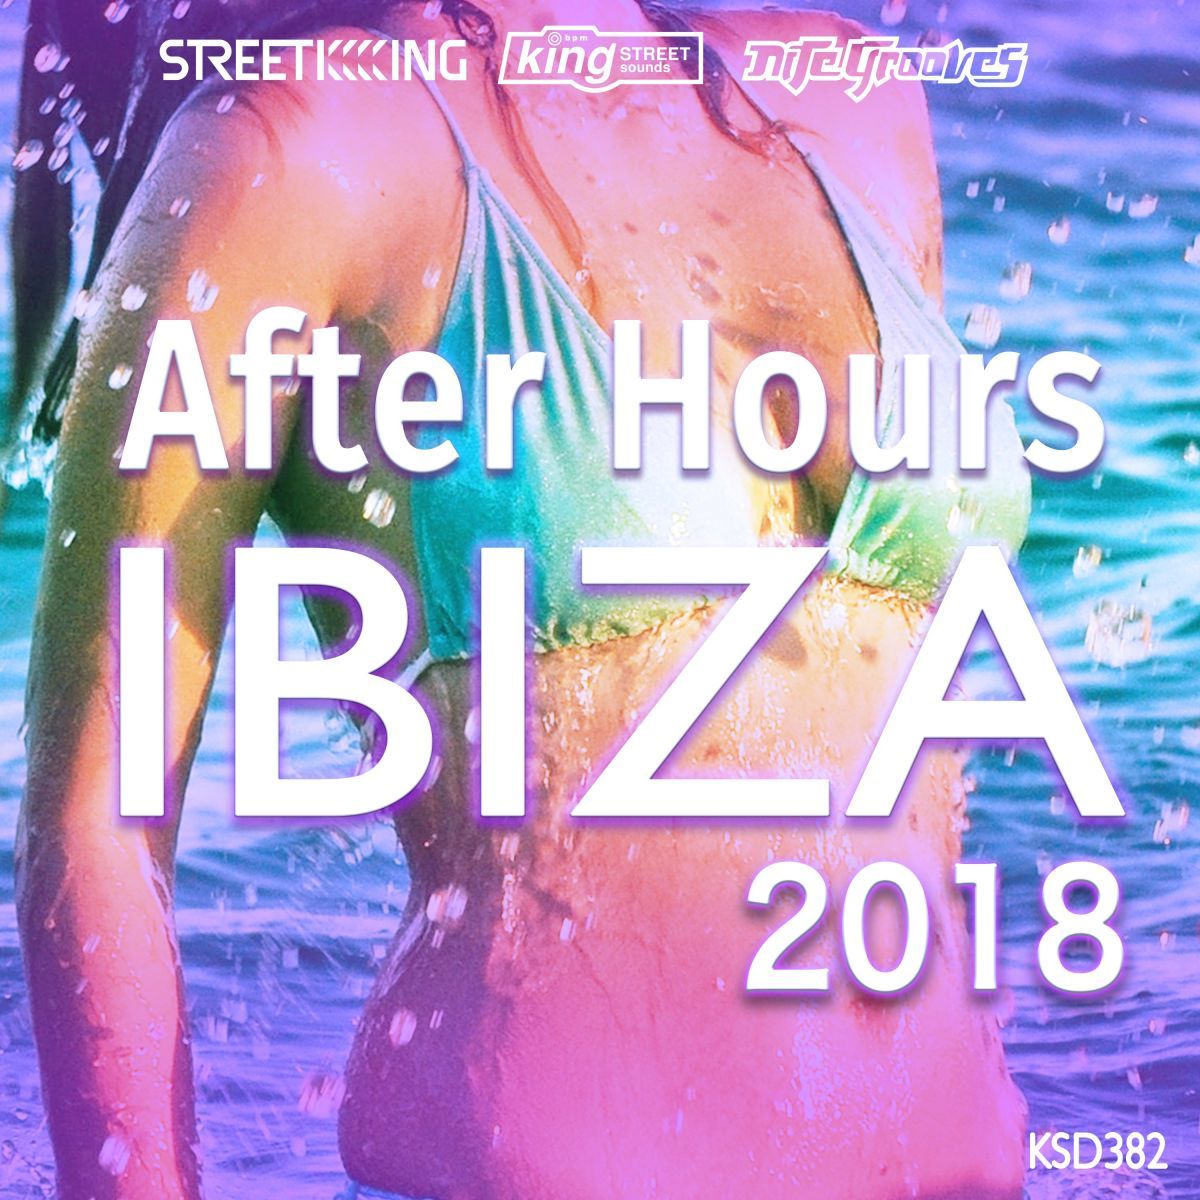 VA - After Hours Ibiza 2018 / Street King